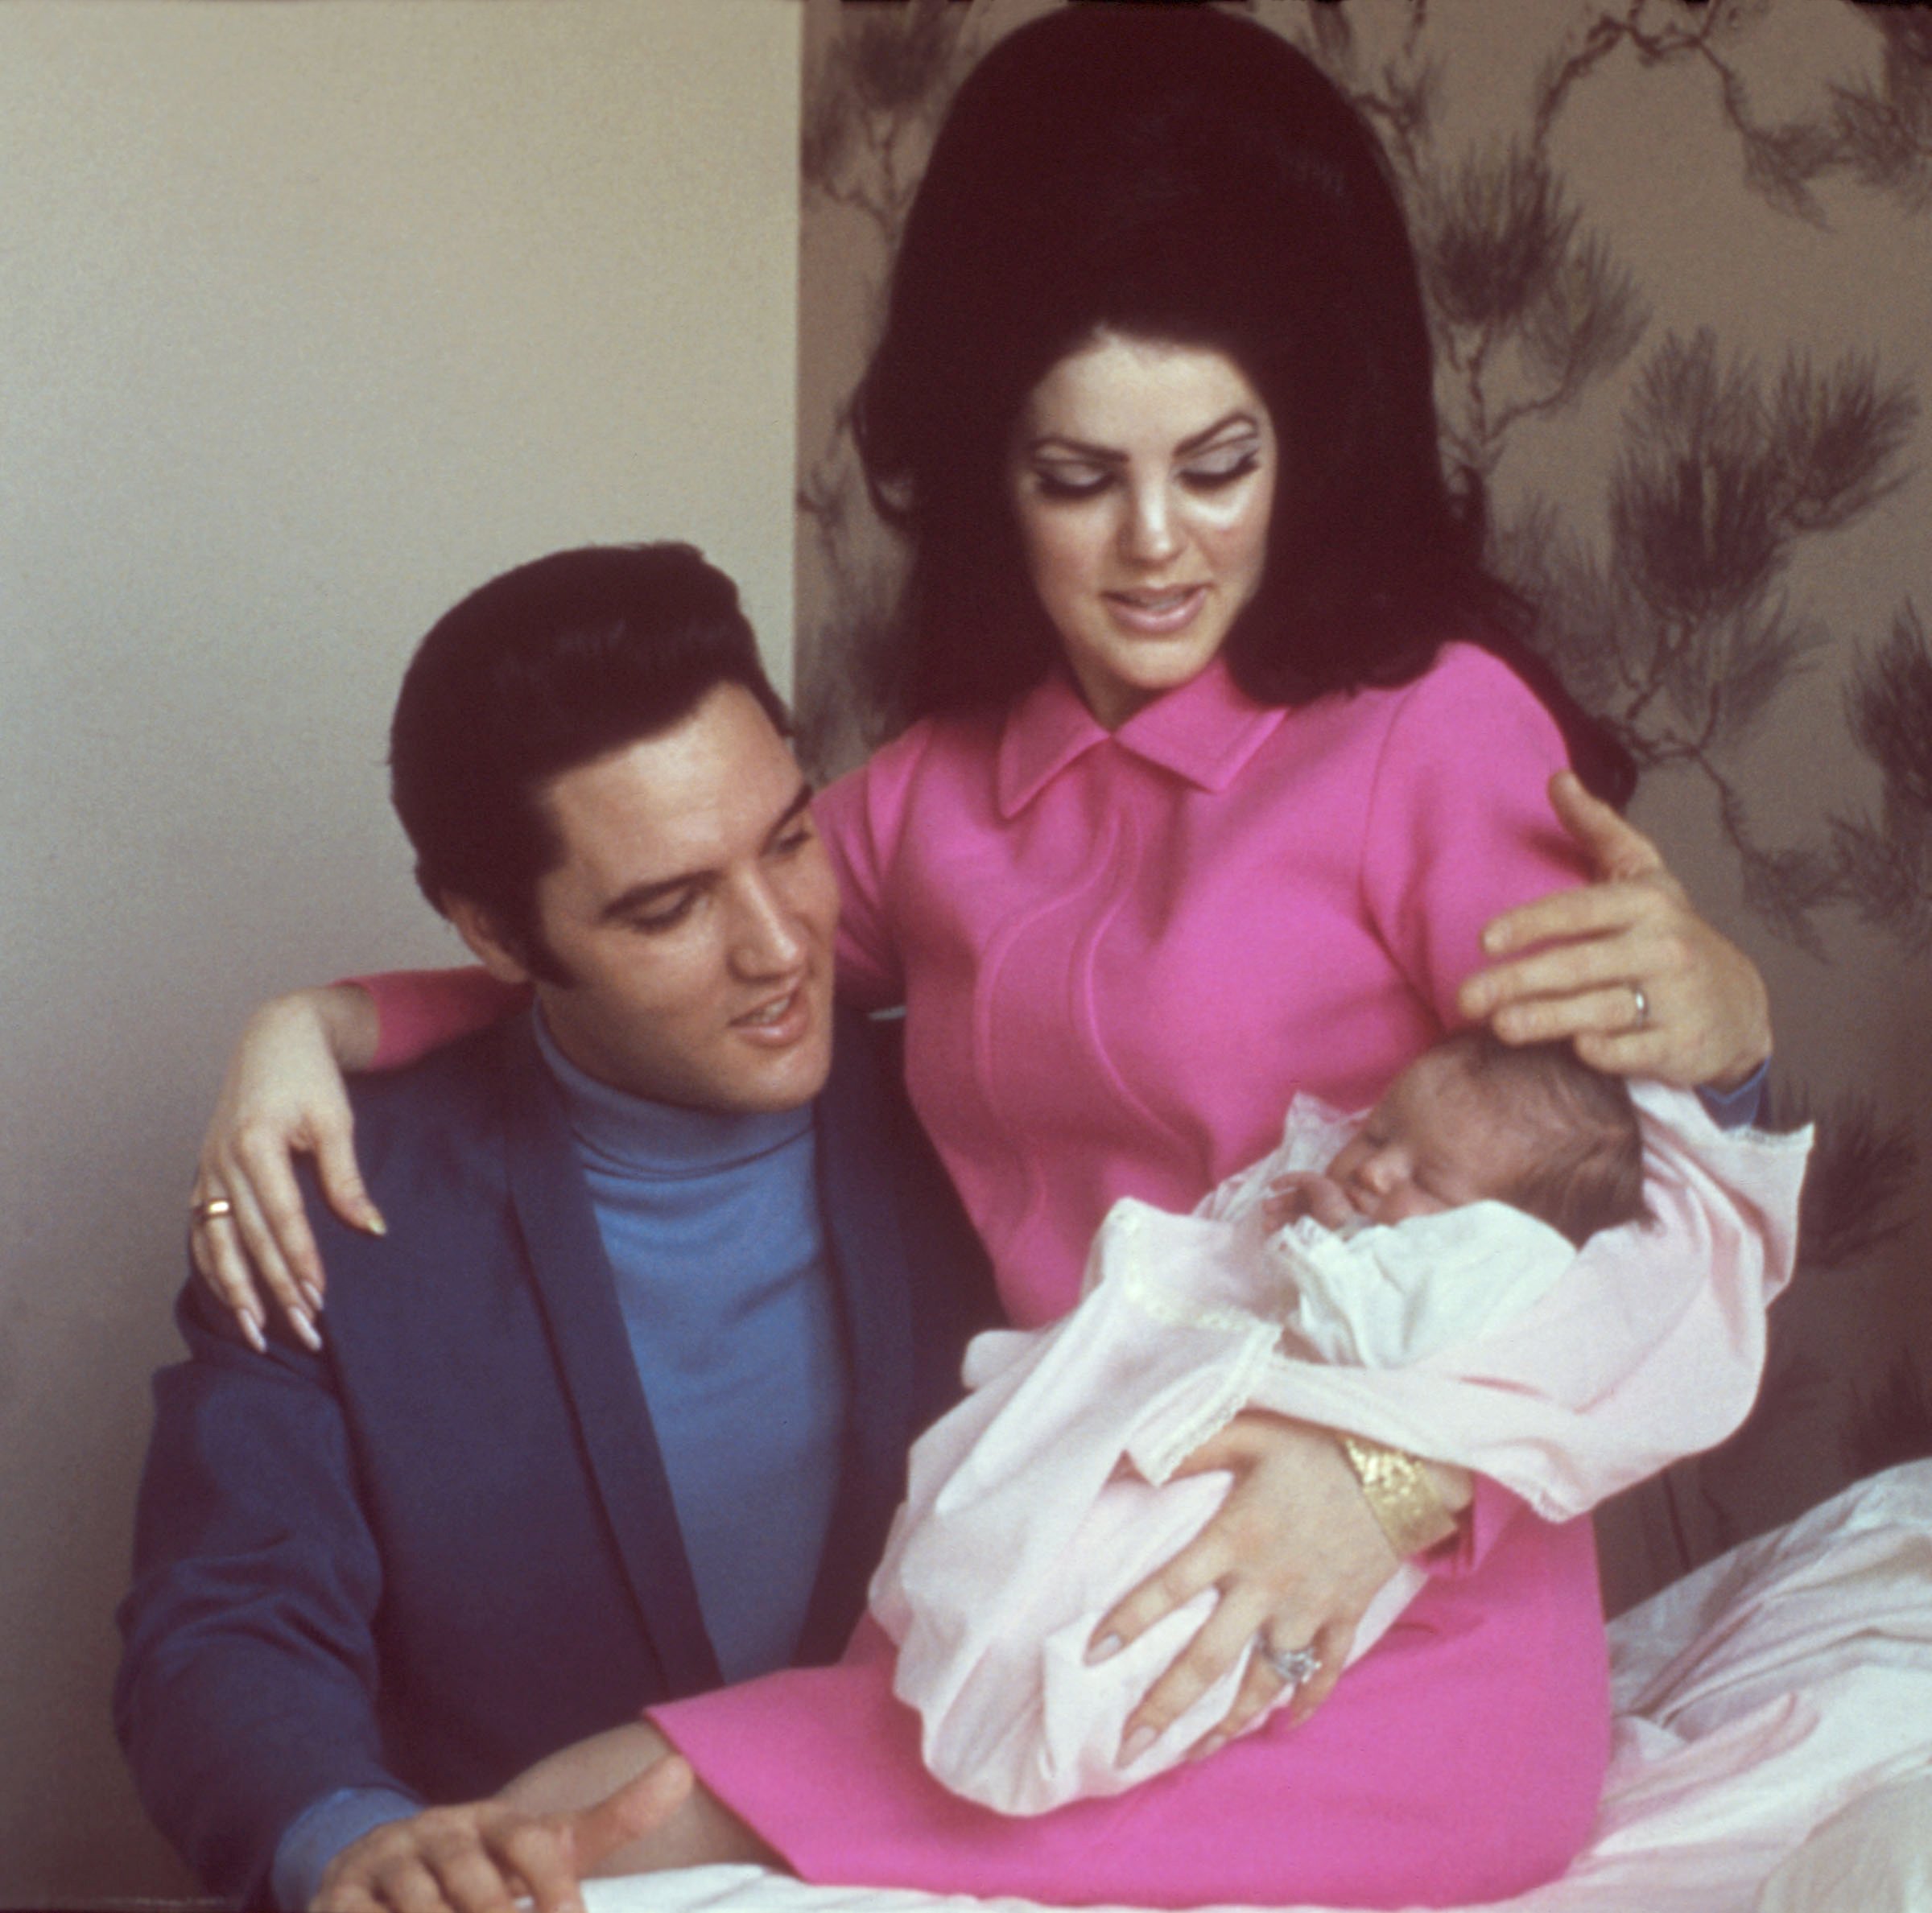 Priscilla Presley holding baby Lisa Marie Presley and putting her arm around Elvis Presley